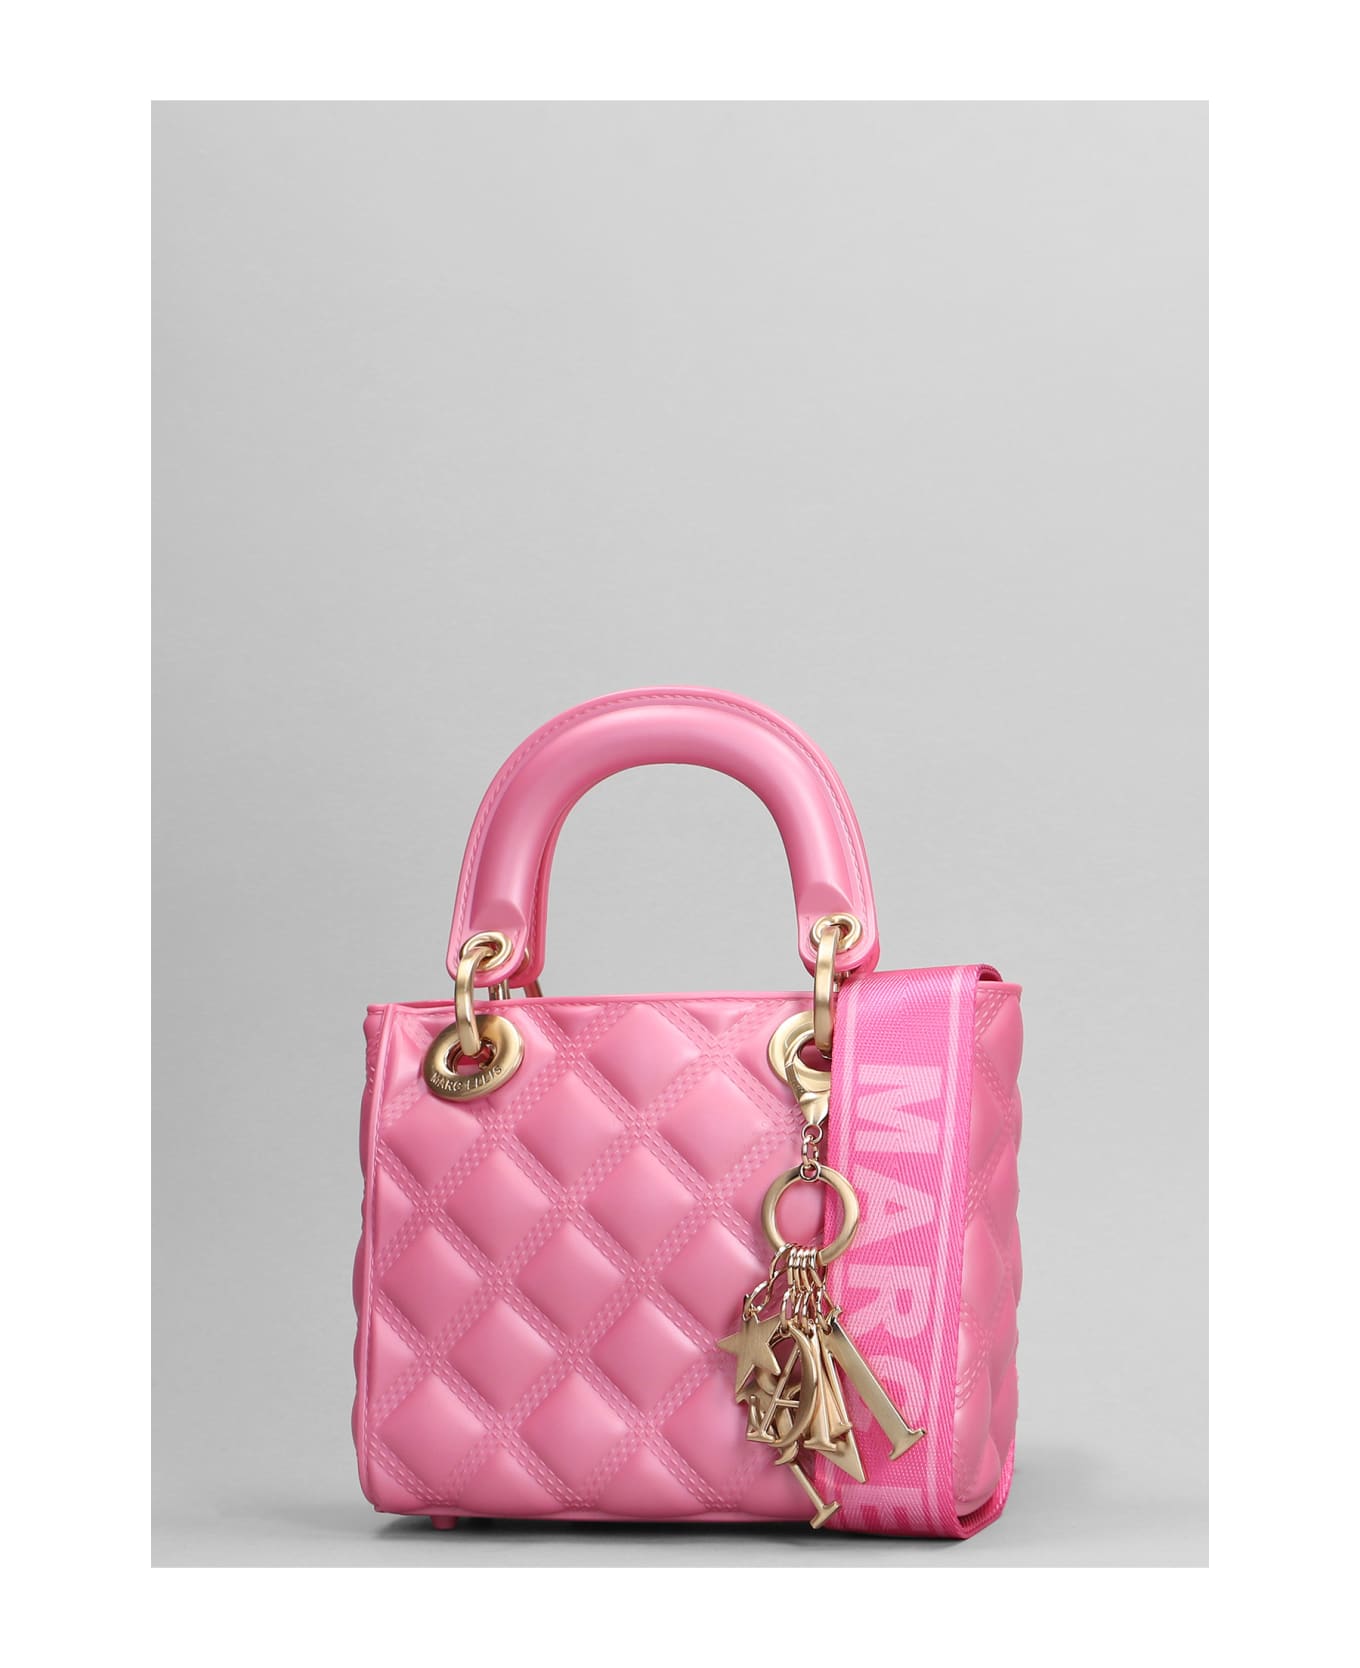 Marc Ellis Flat Missy S Hand Bag In Rose-pink Pvc - rose-pink